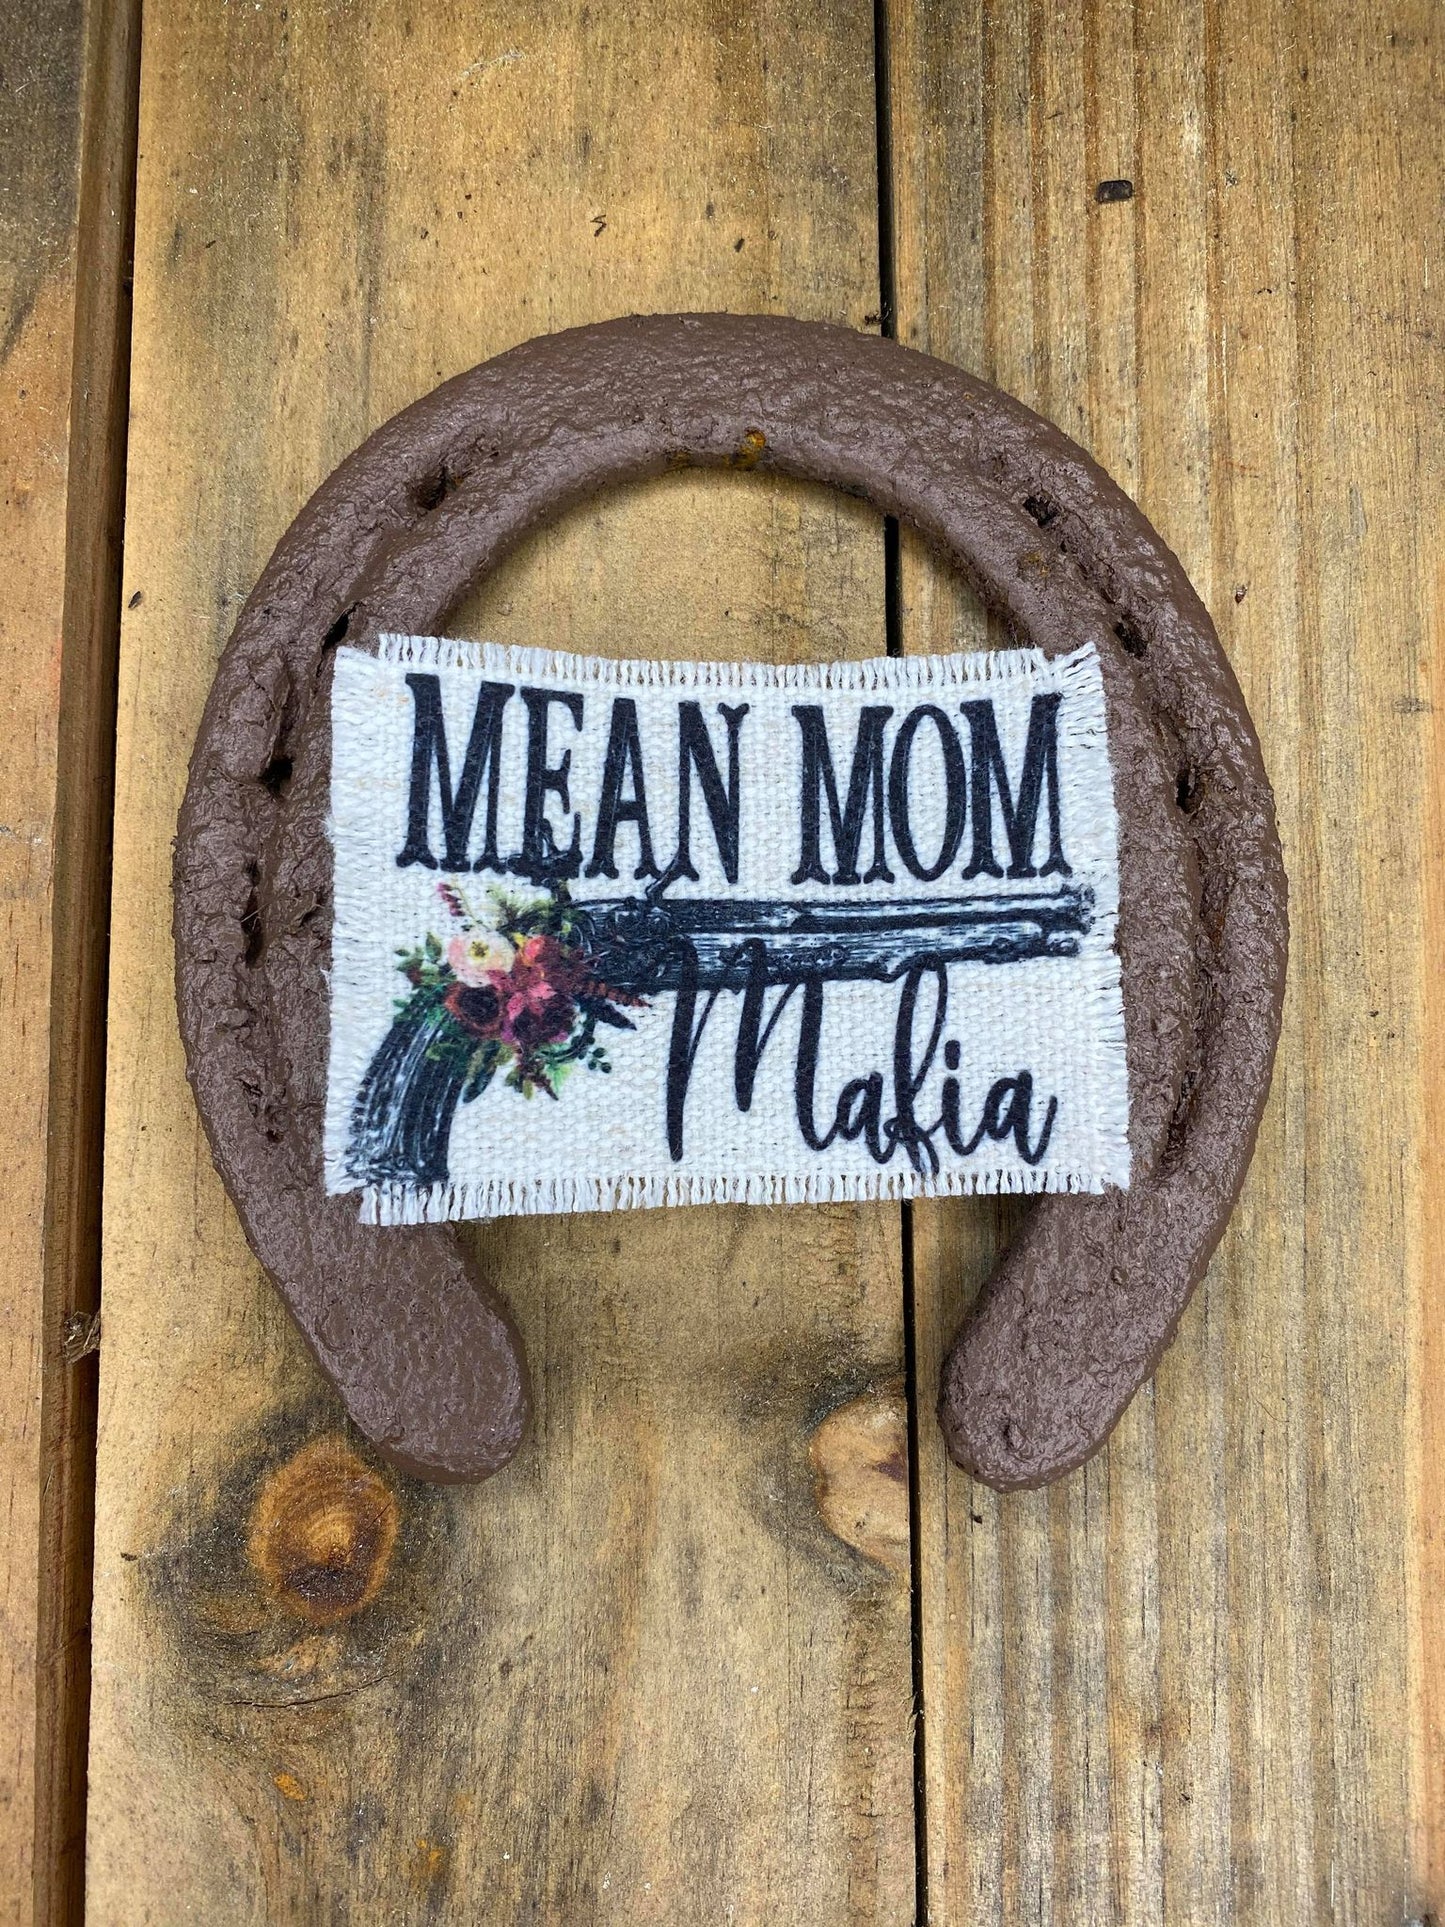 Mean Mom Mafia Hat Patch